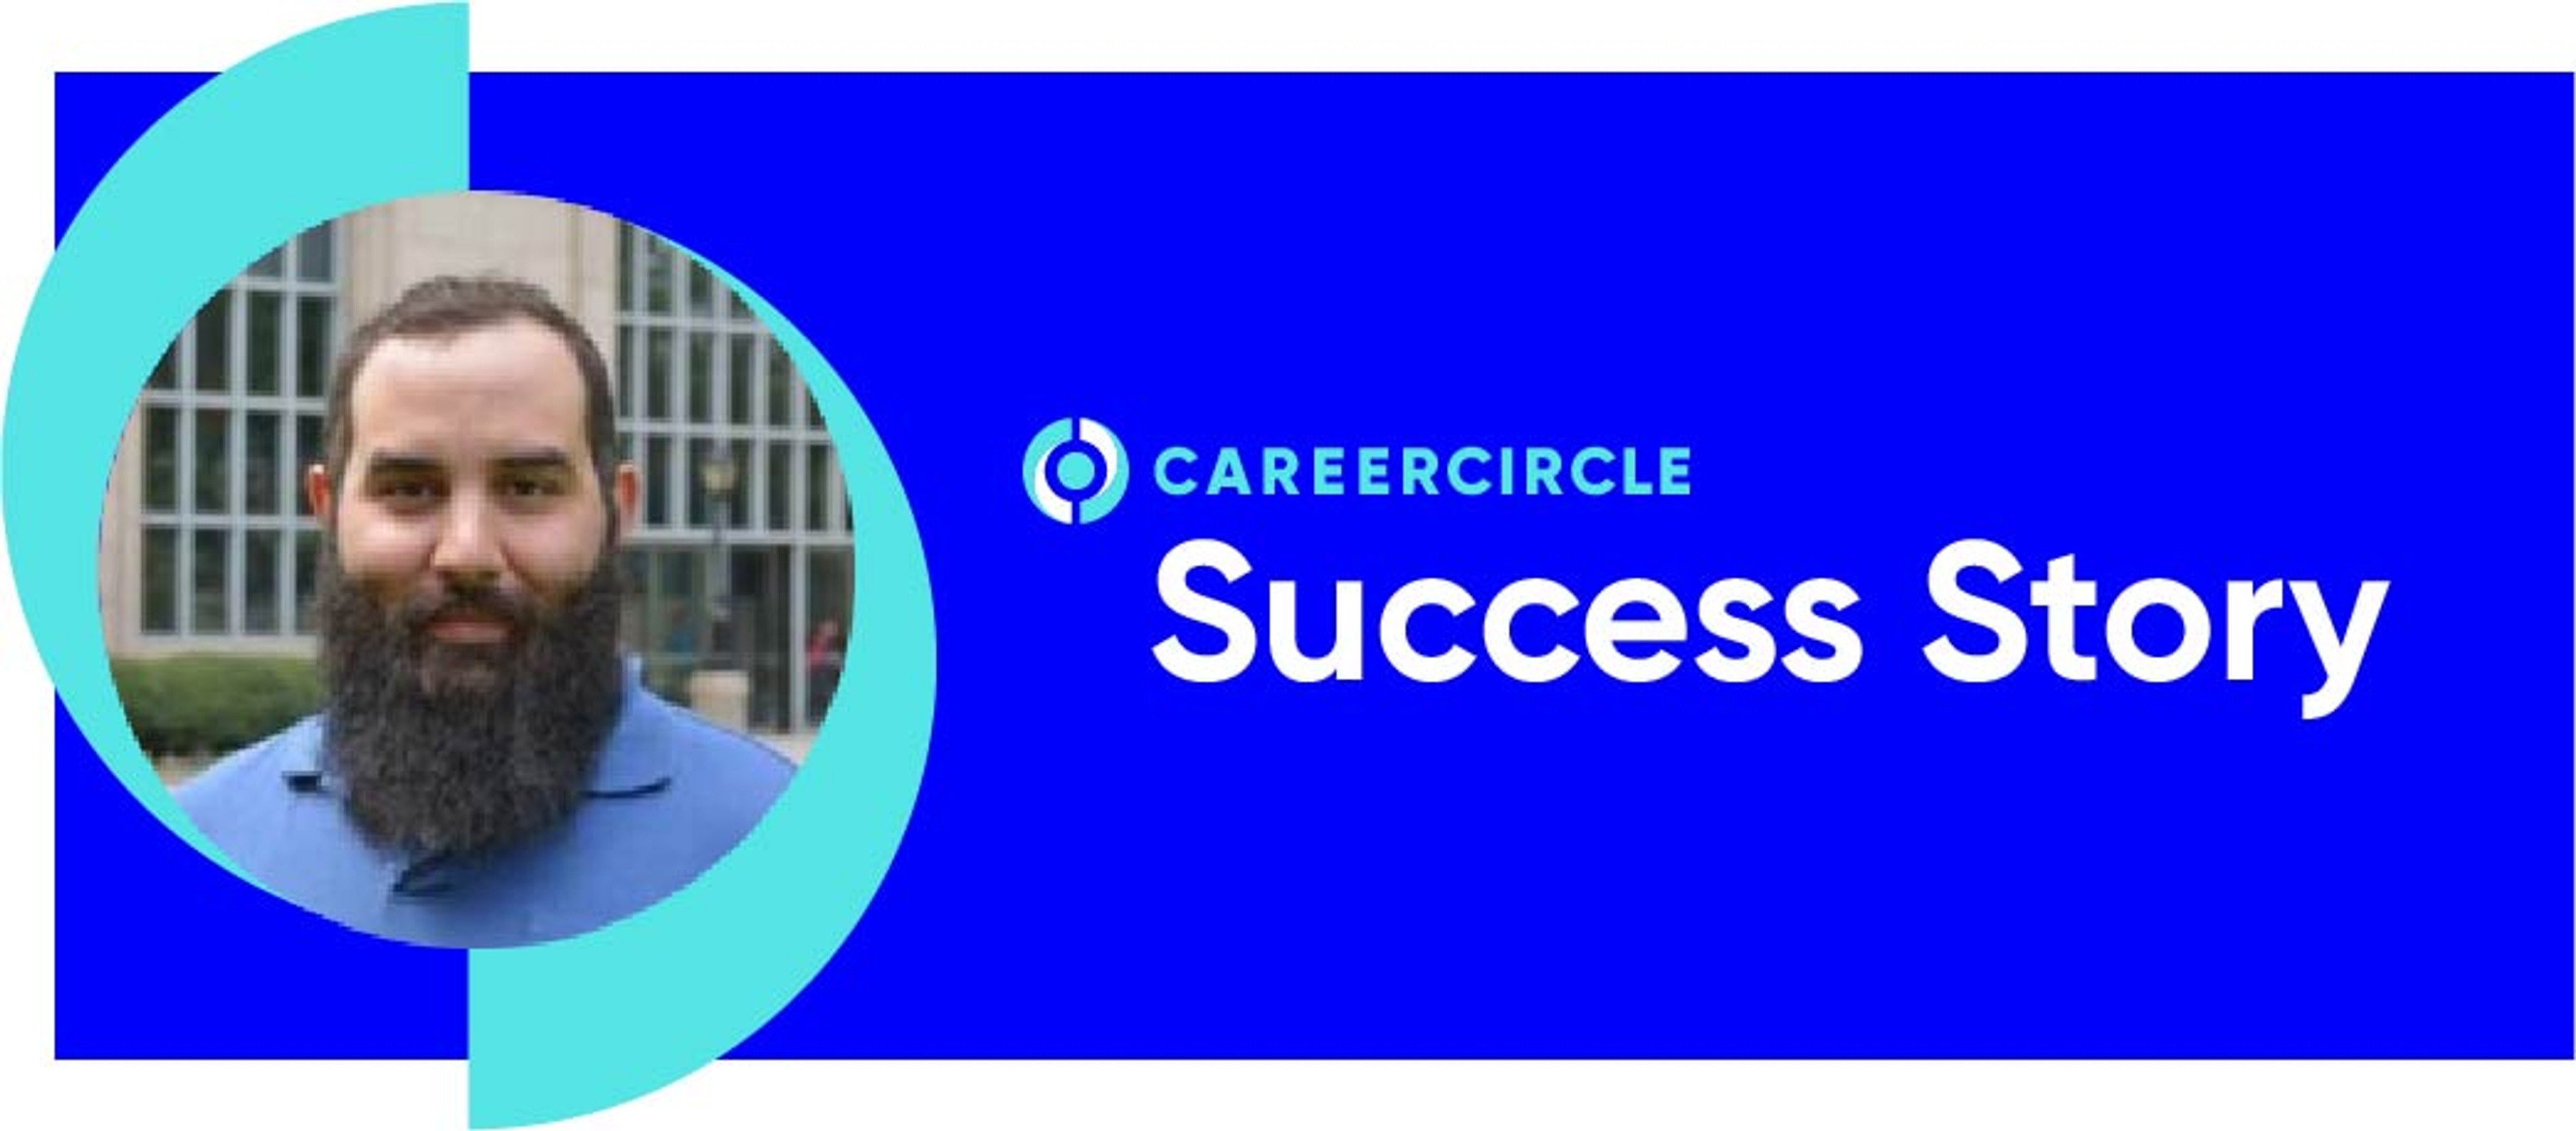 CareerCircle "Success Story" image of a CareerCircle member